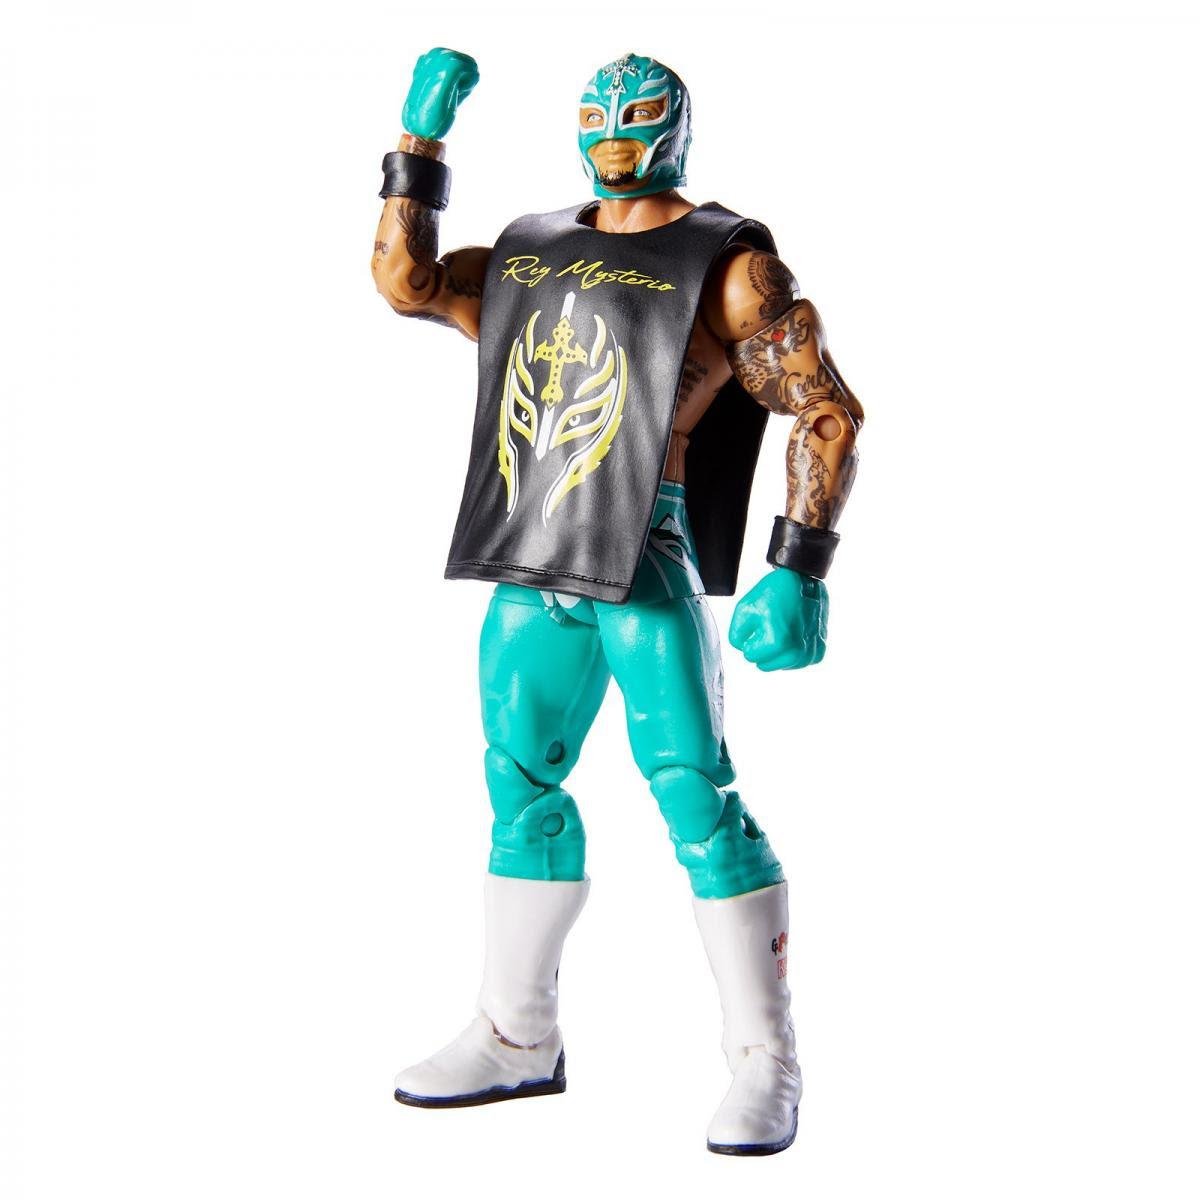 Image of WWE Wrestling Elite Series 69 - Rey Mysterio Action Figure - SEPTEMBER 2019